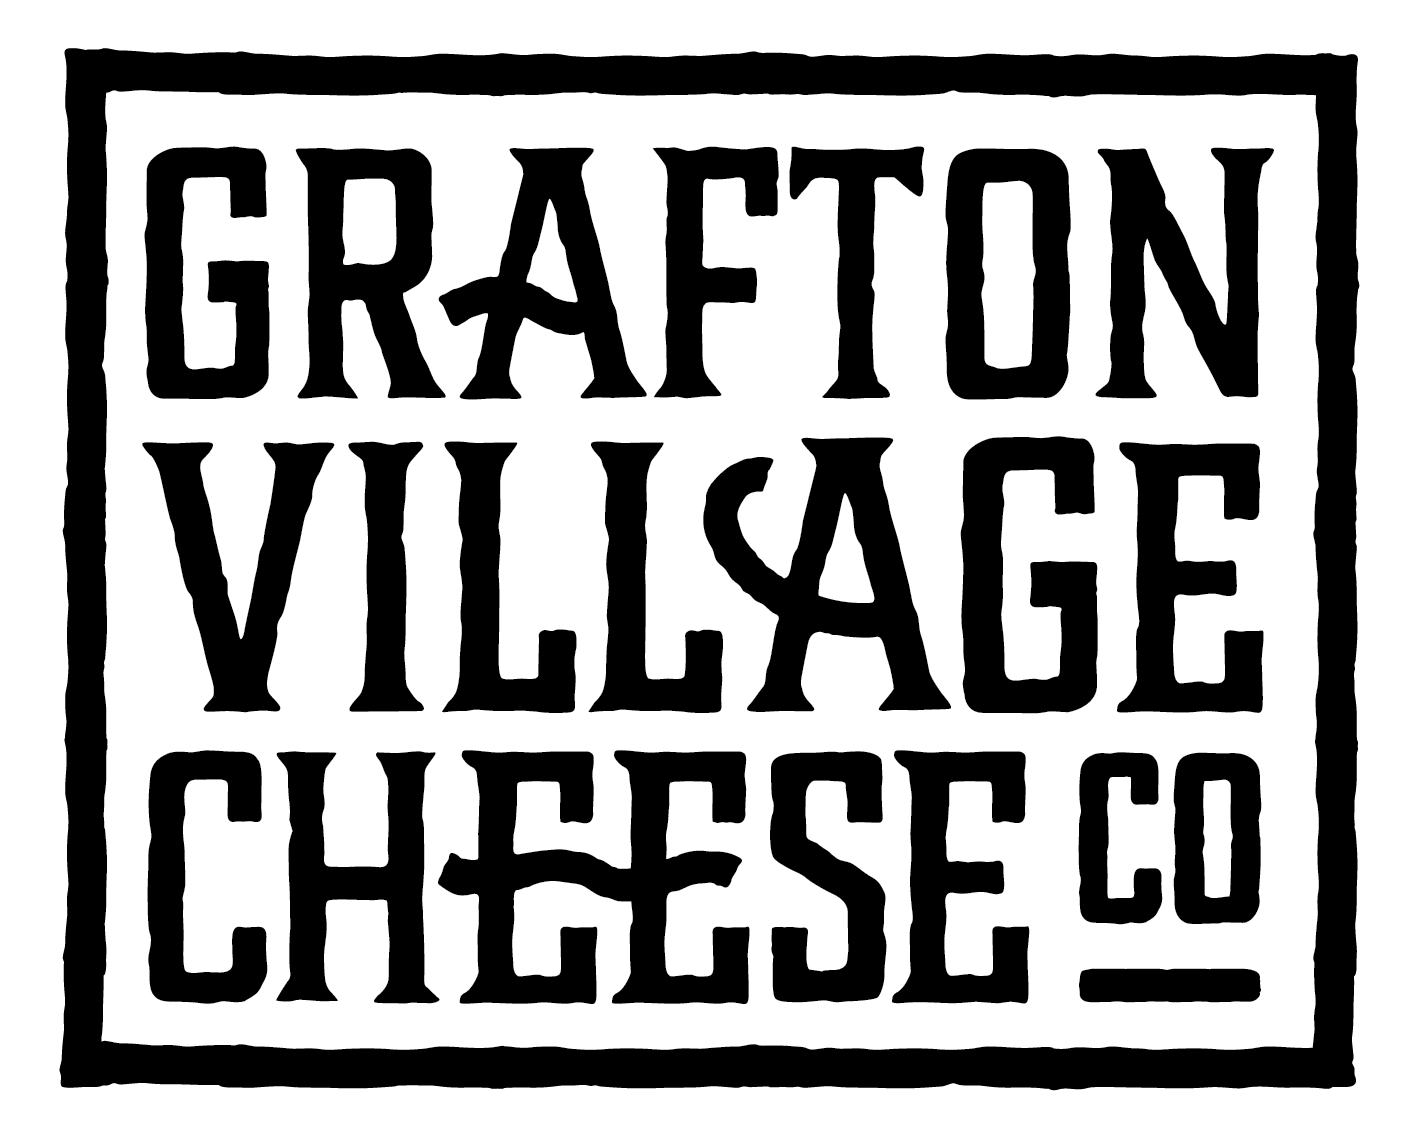 Grafton Village Cheese Co